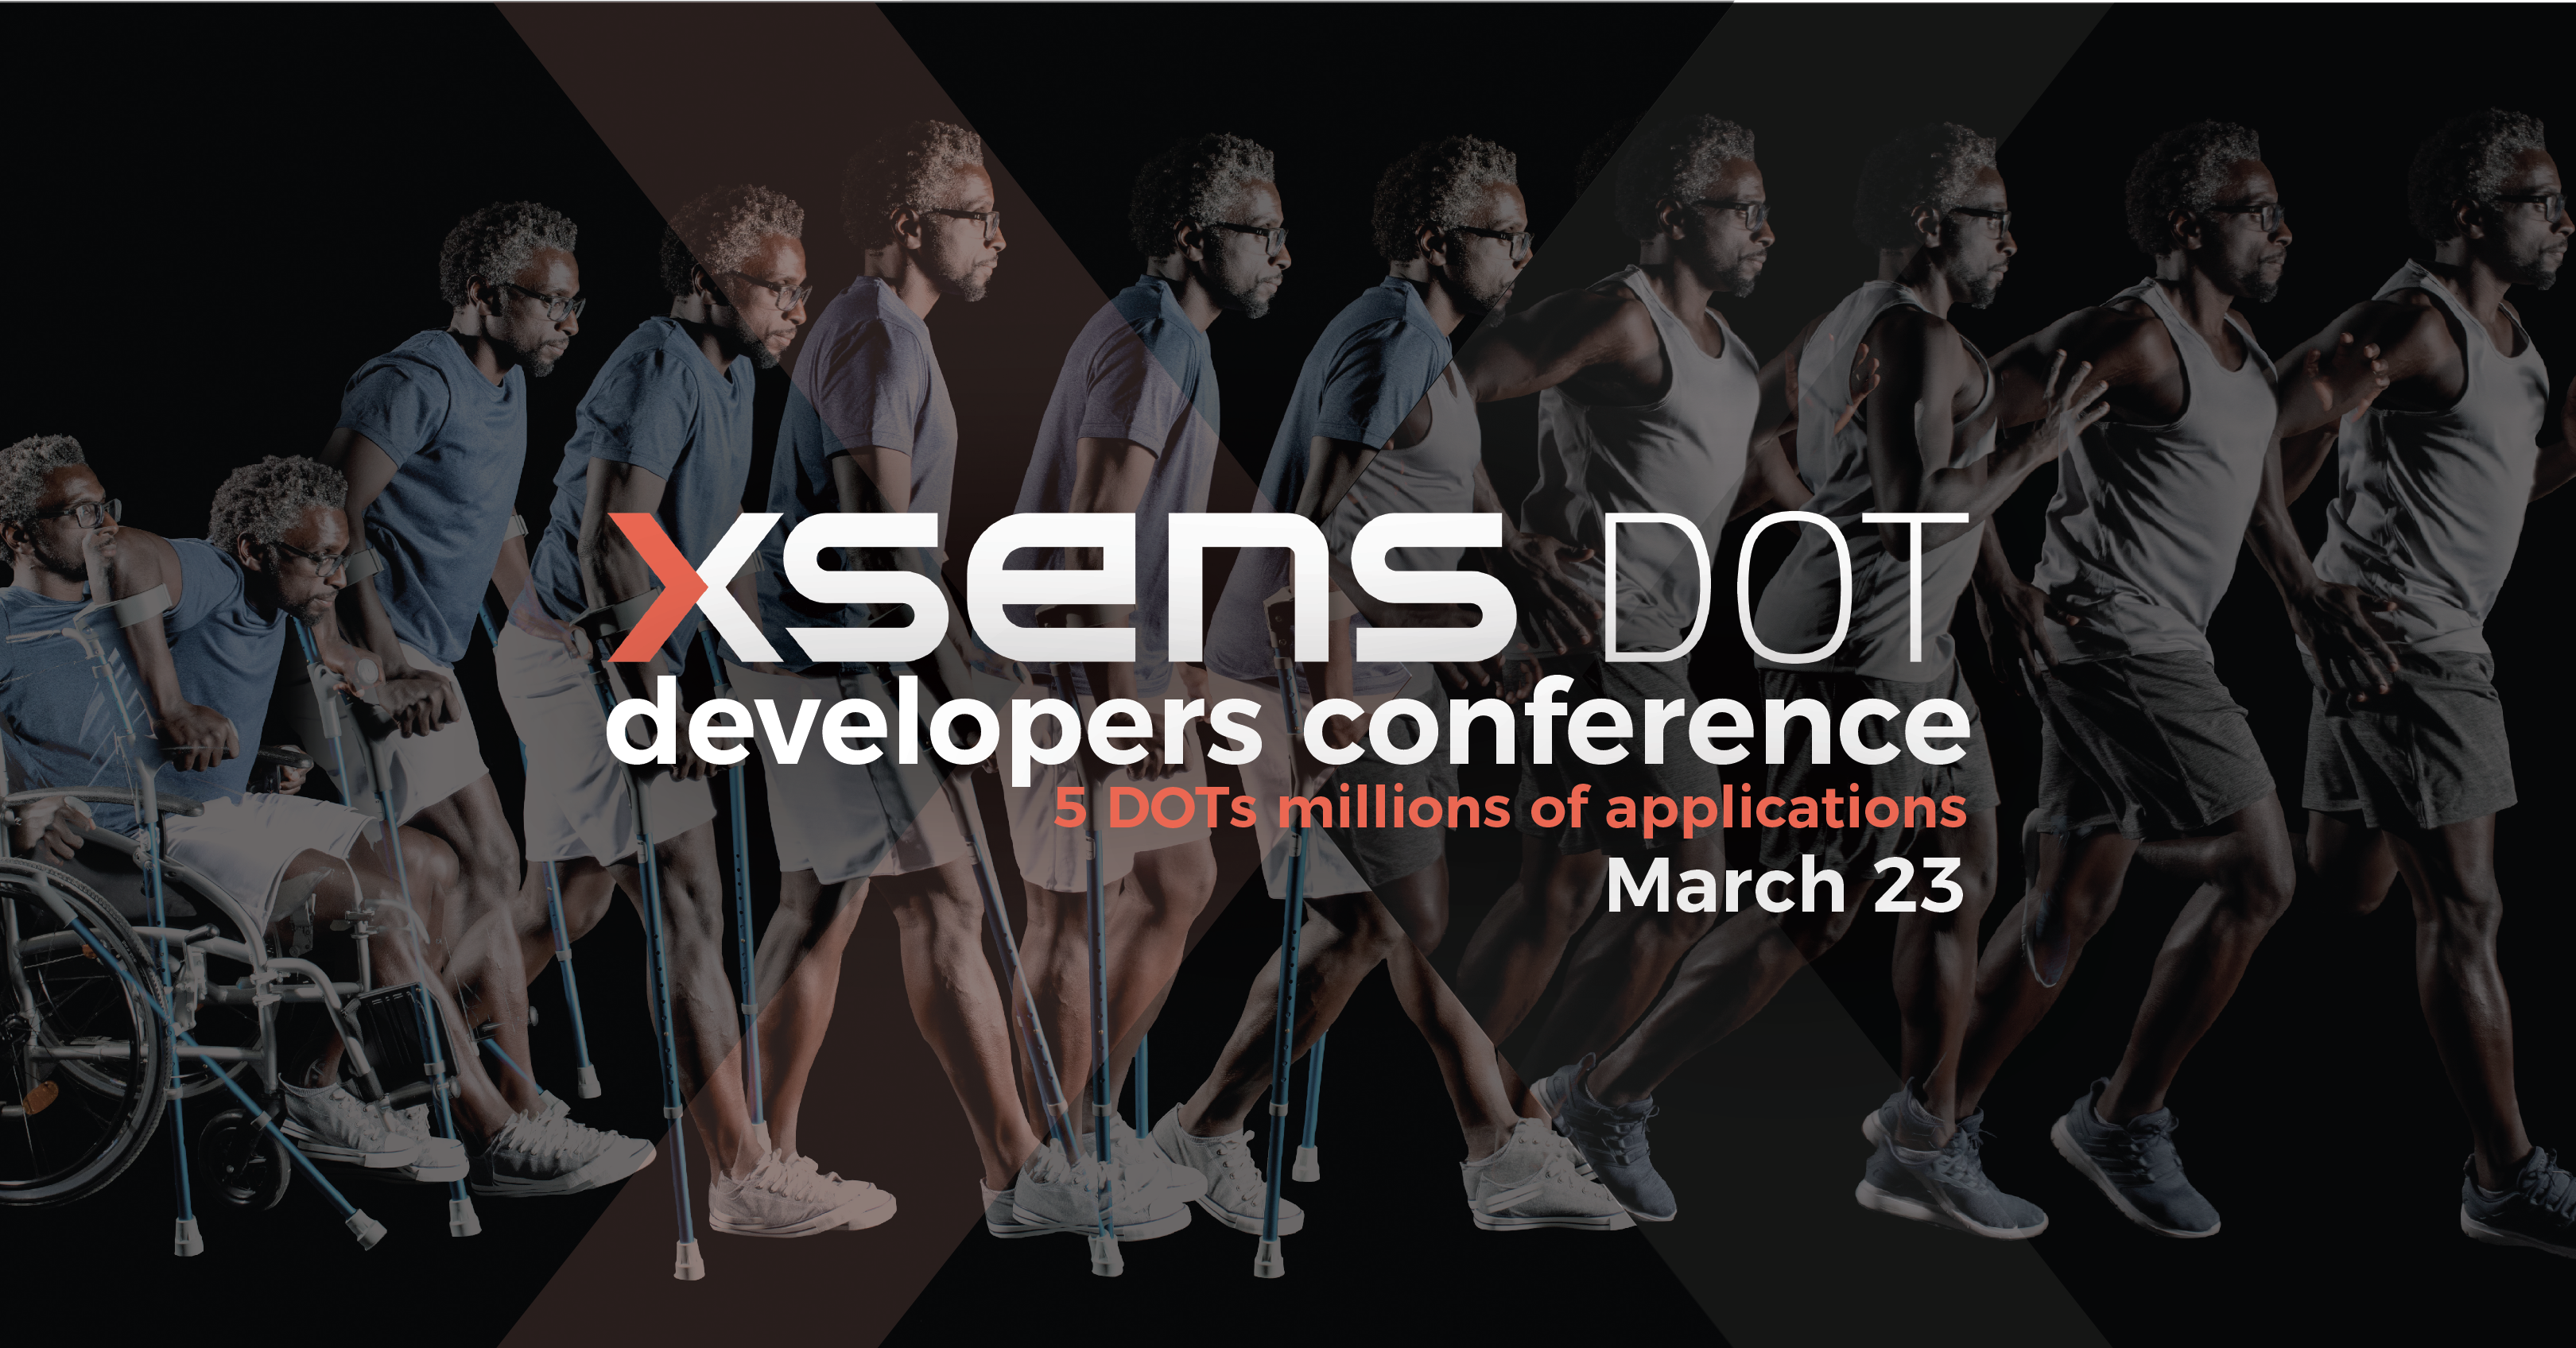 xsens dot conference-01-1